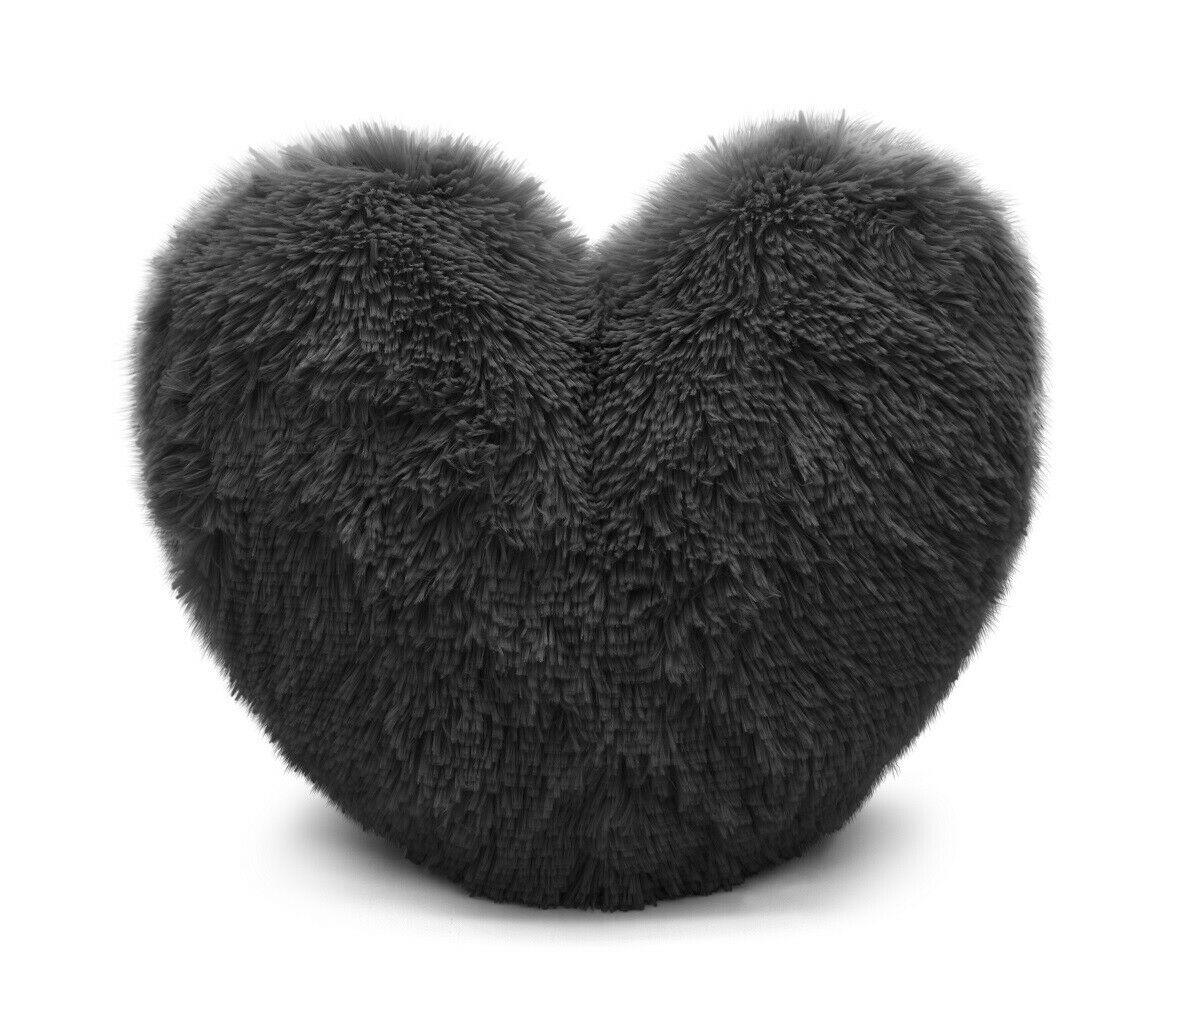 Teddy Bear Fleece Heart Shape Filled Fluffy Cushion 38cm - 11 Colours - Home Inspired Gifts